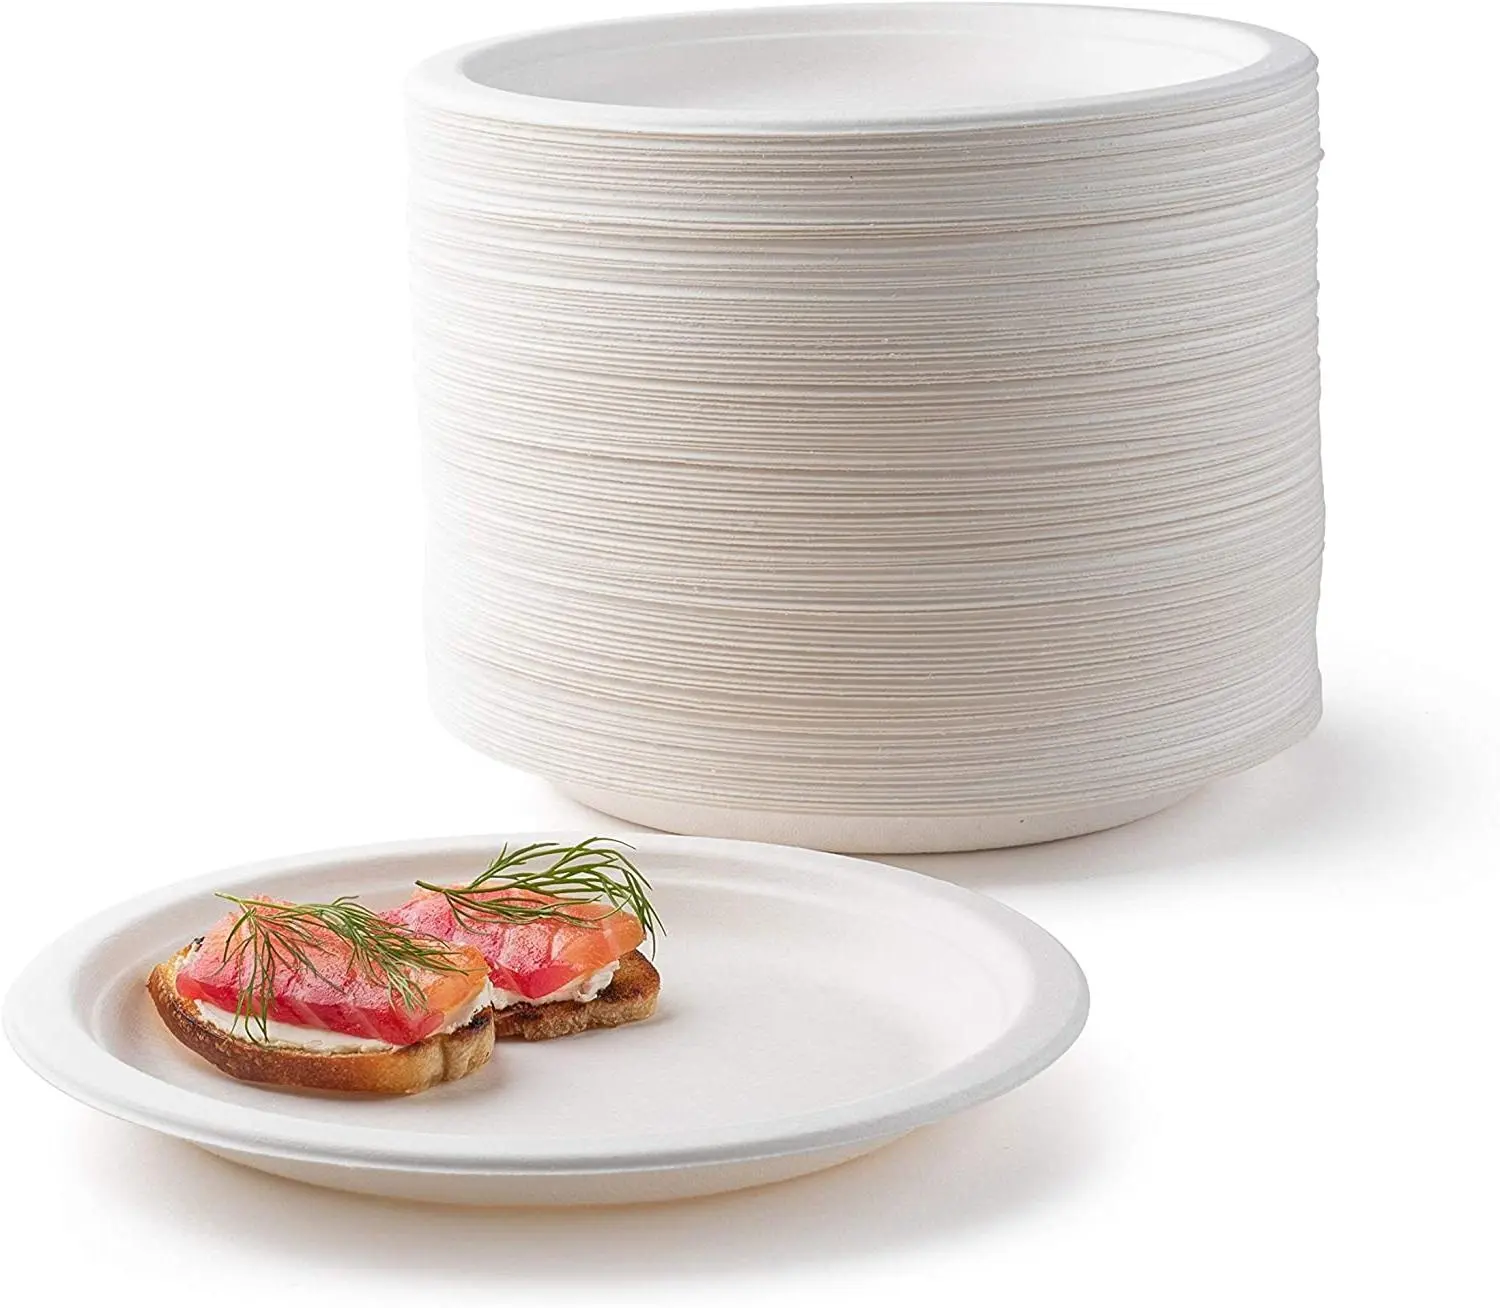 Bio Degradable Bagasse Plates Disposable Paper Plates dinner plates